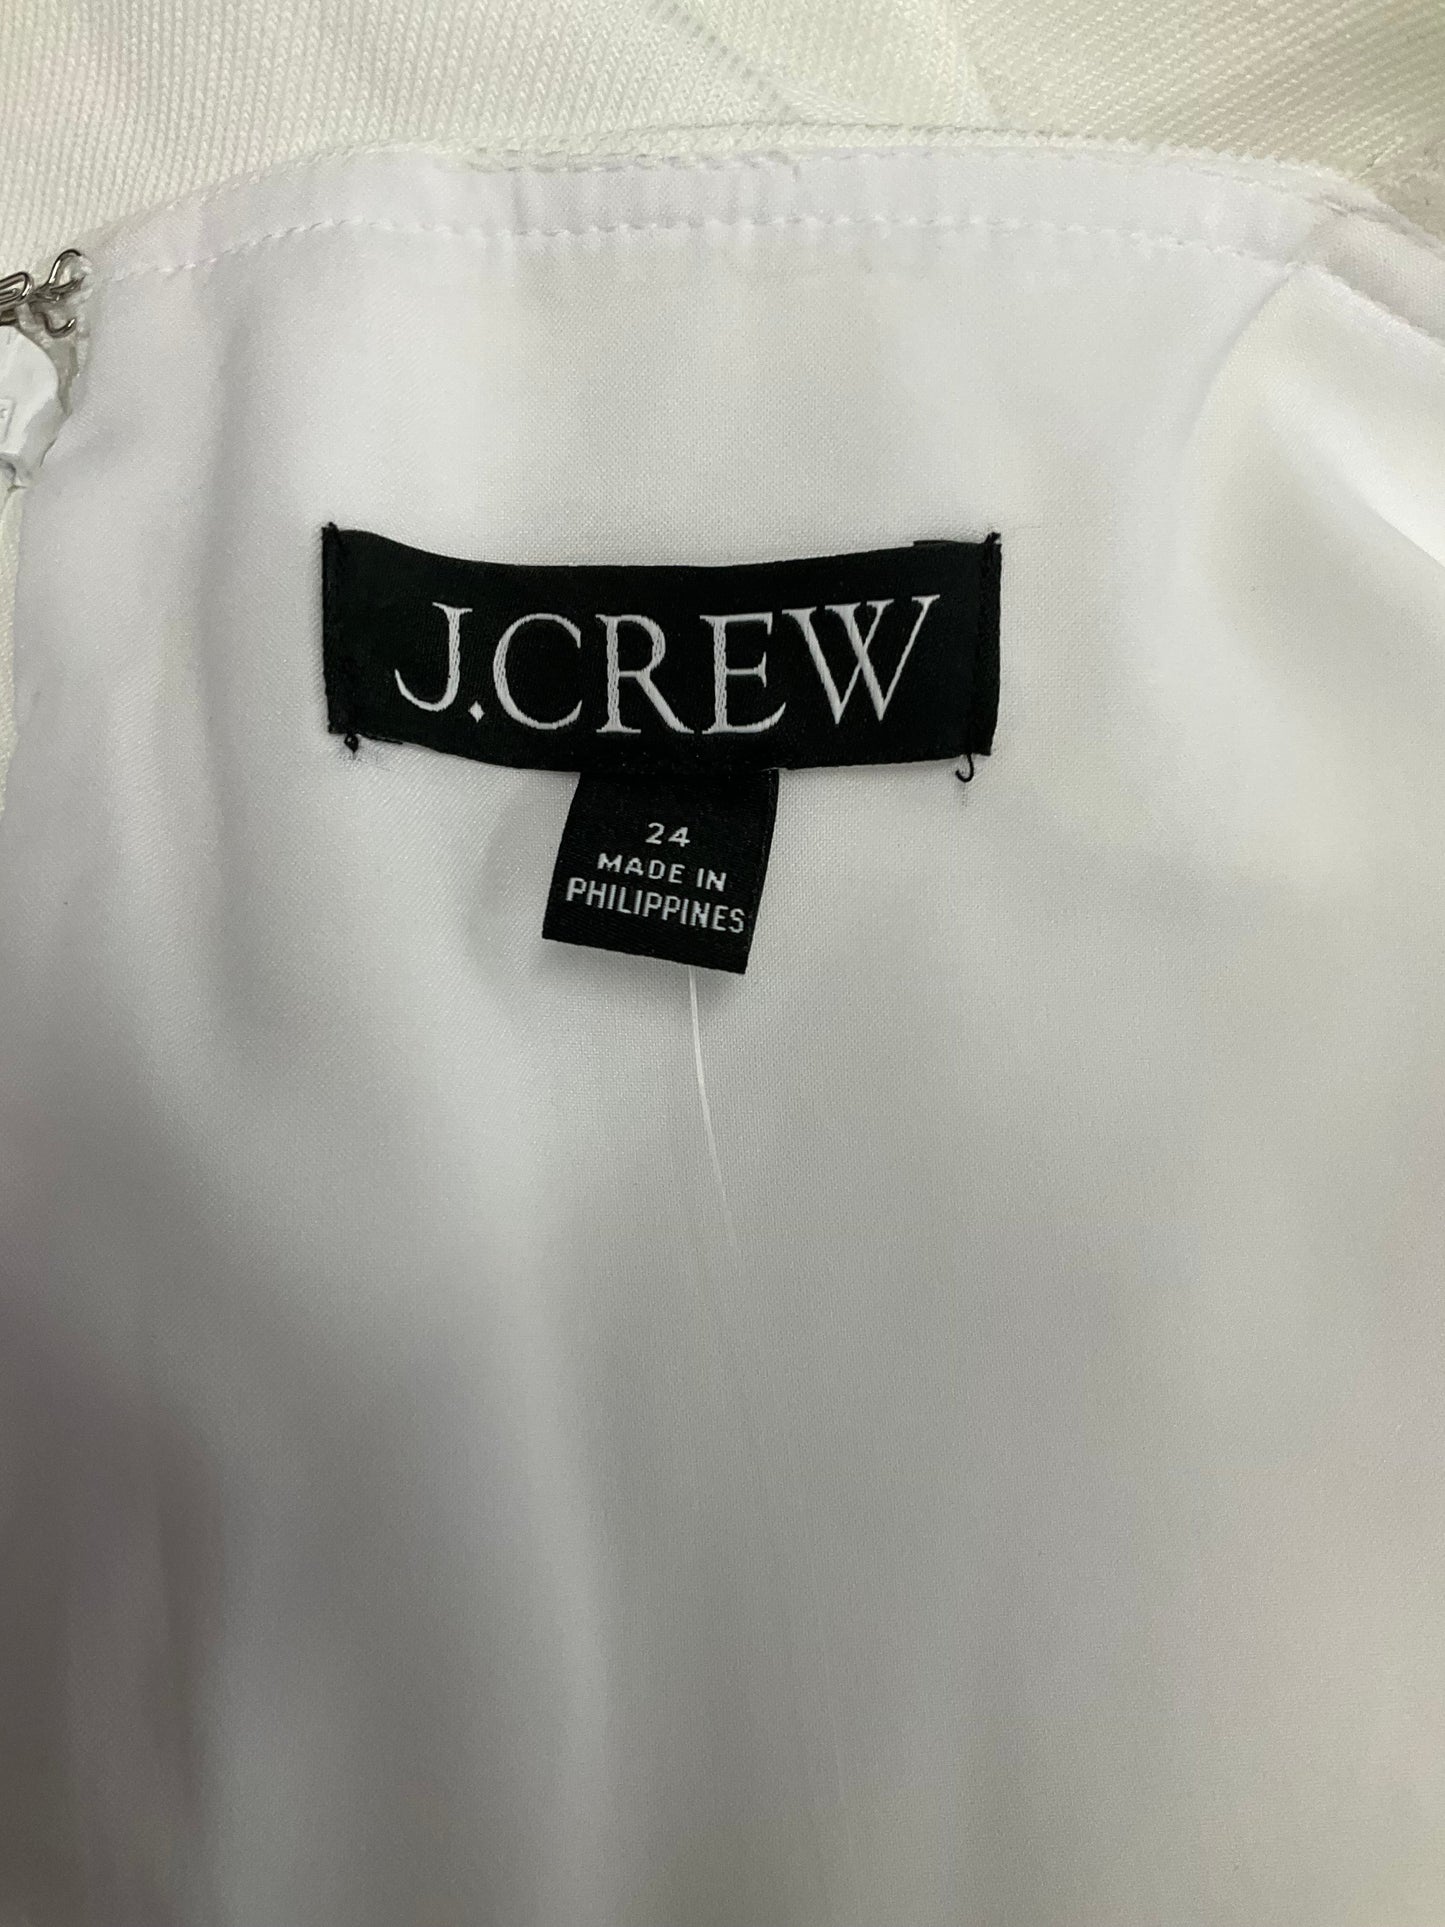 White Dress Casual Short J. Crew, Size 24